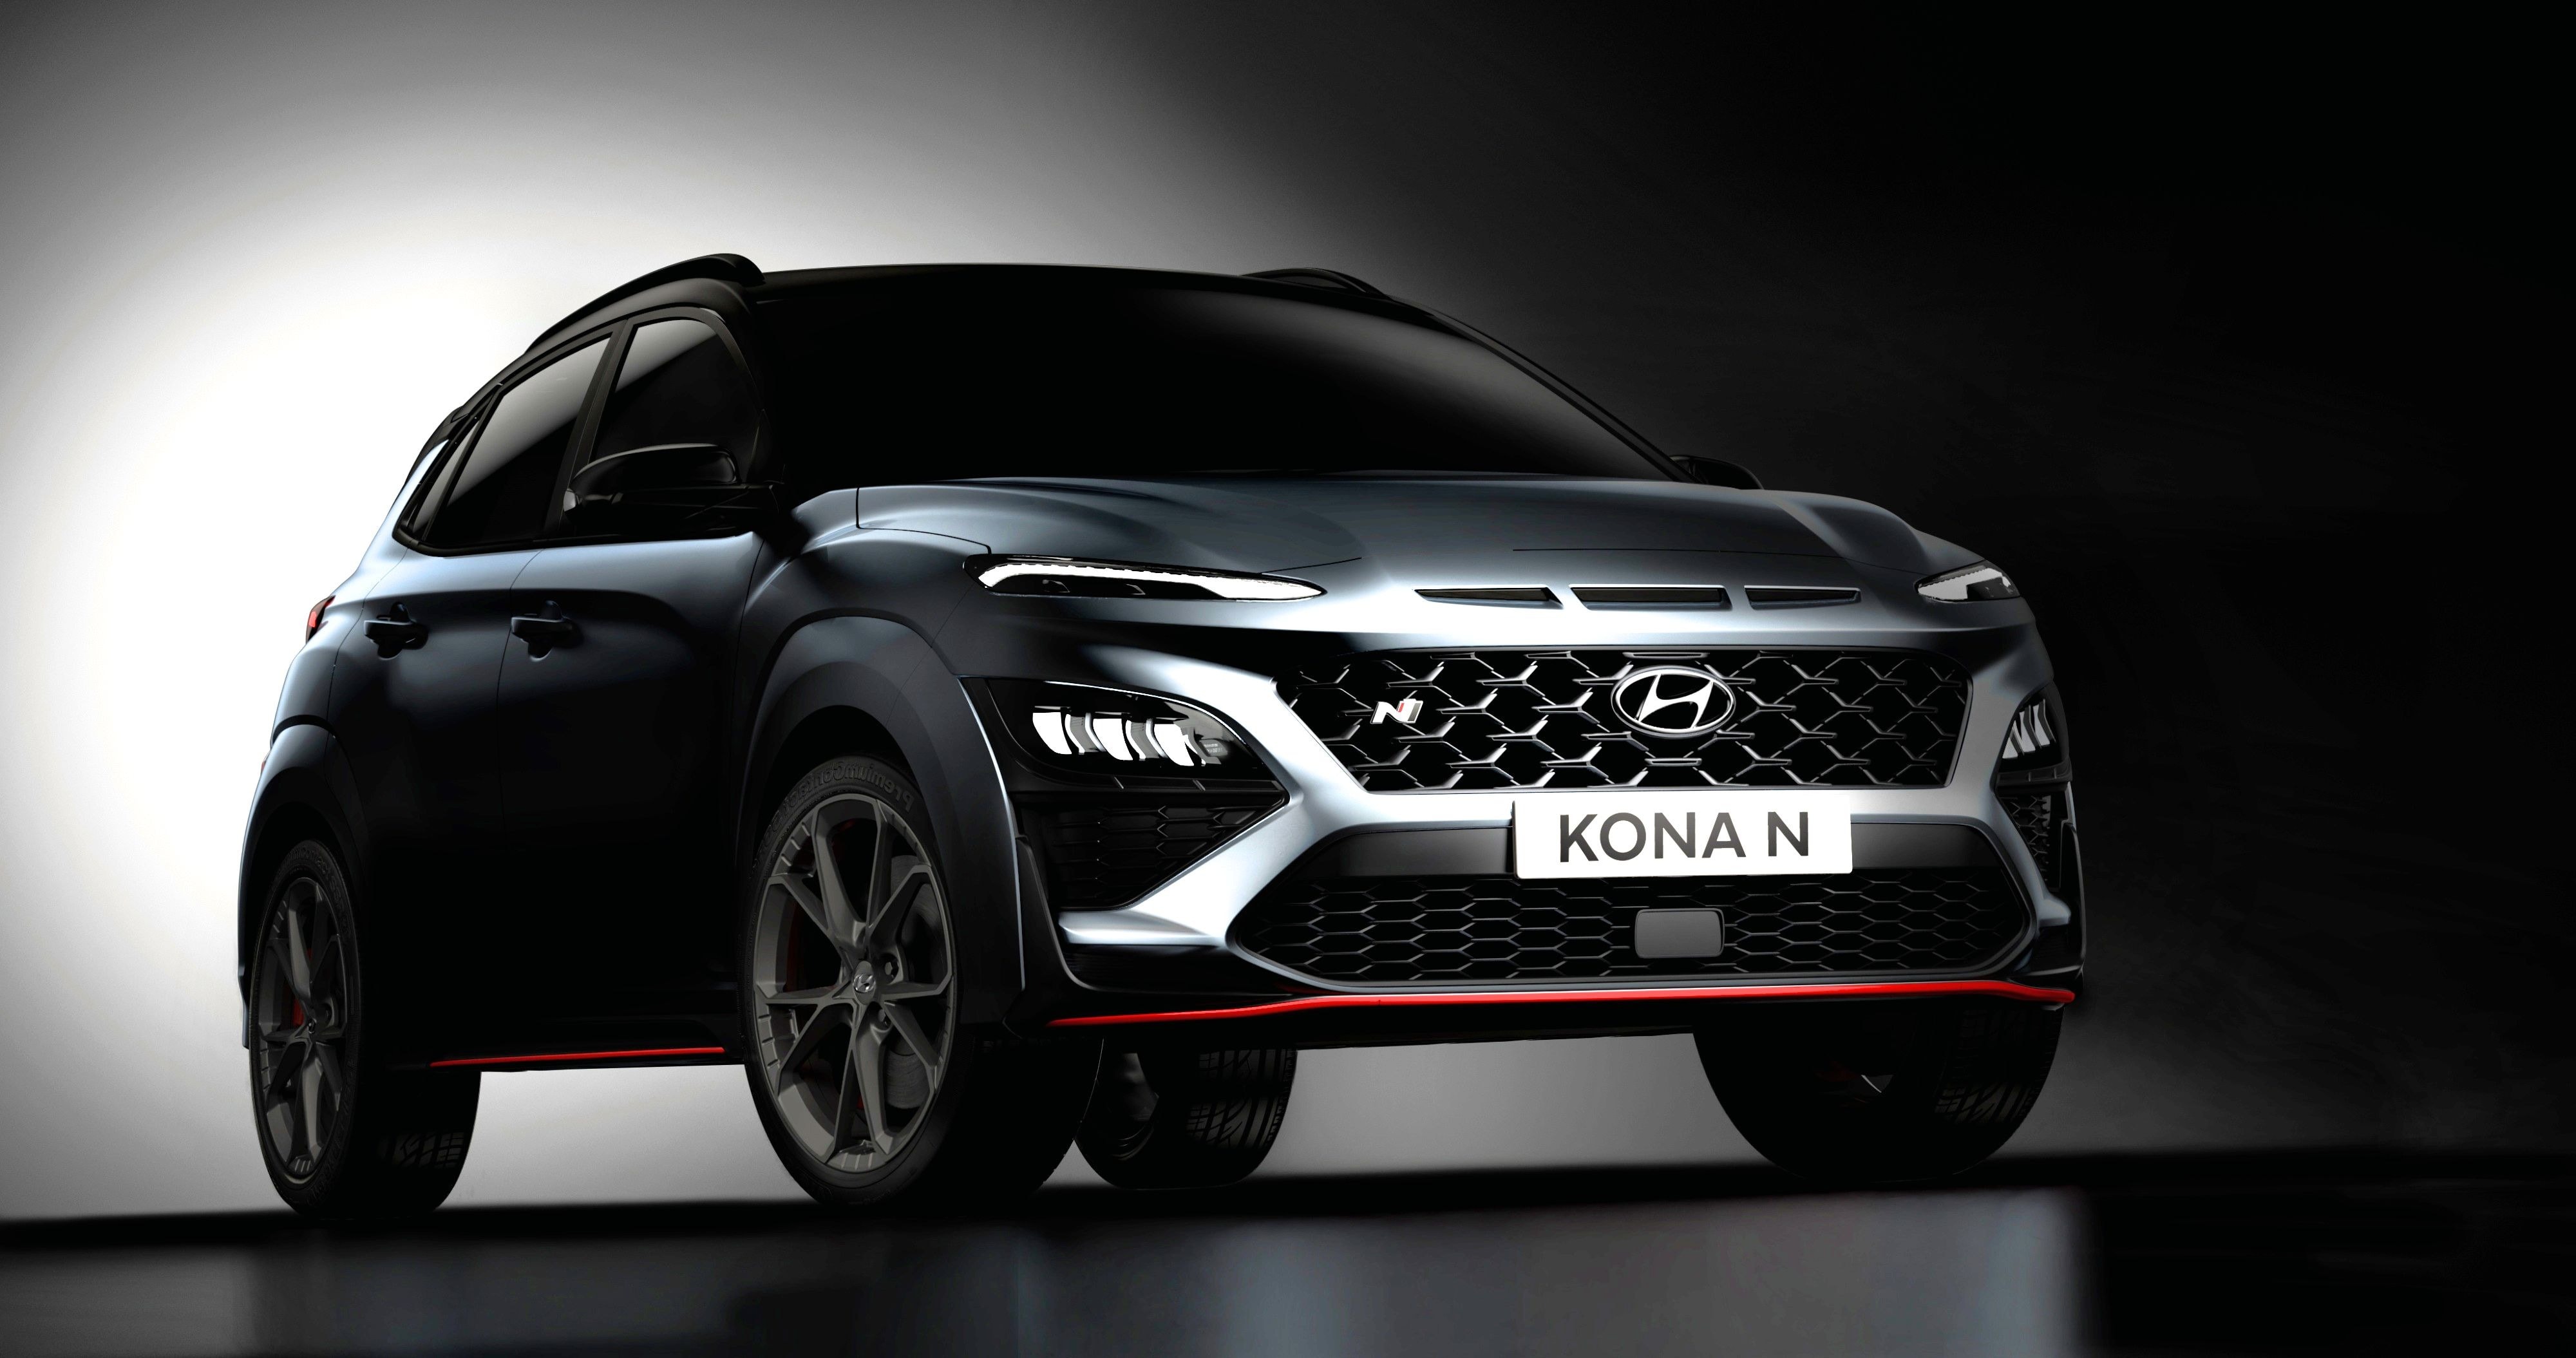 U.S.Bound Hyundai Kona N Hot SUV Shows Its Aggressive Face for the